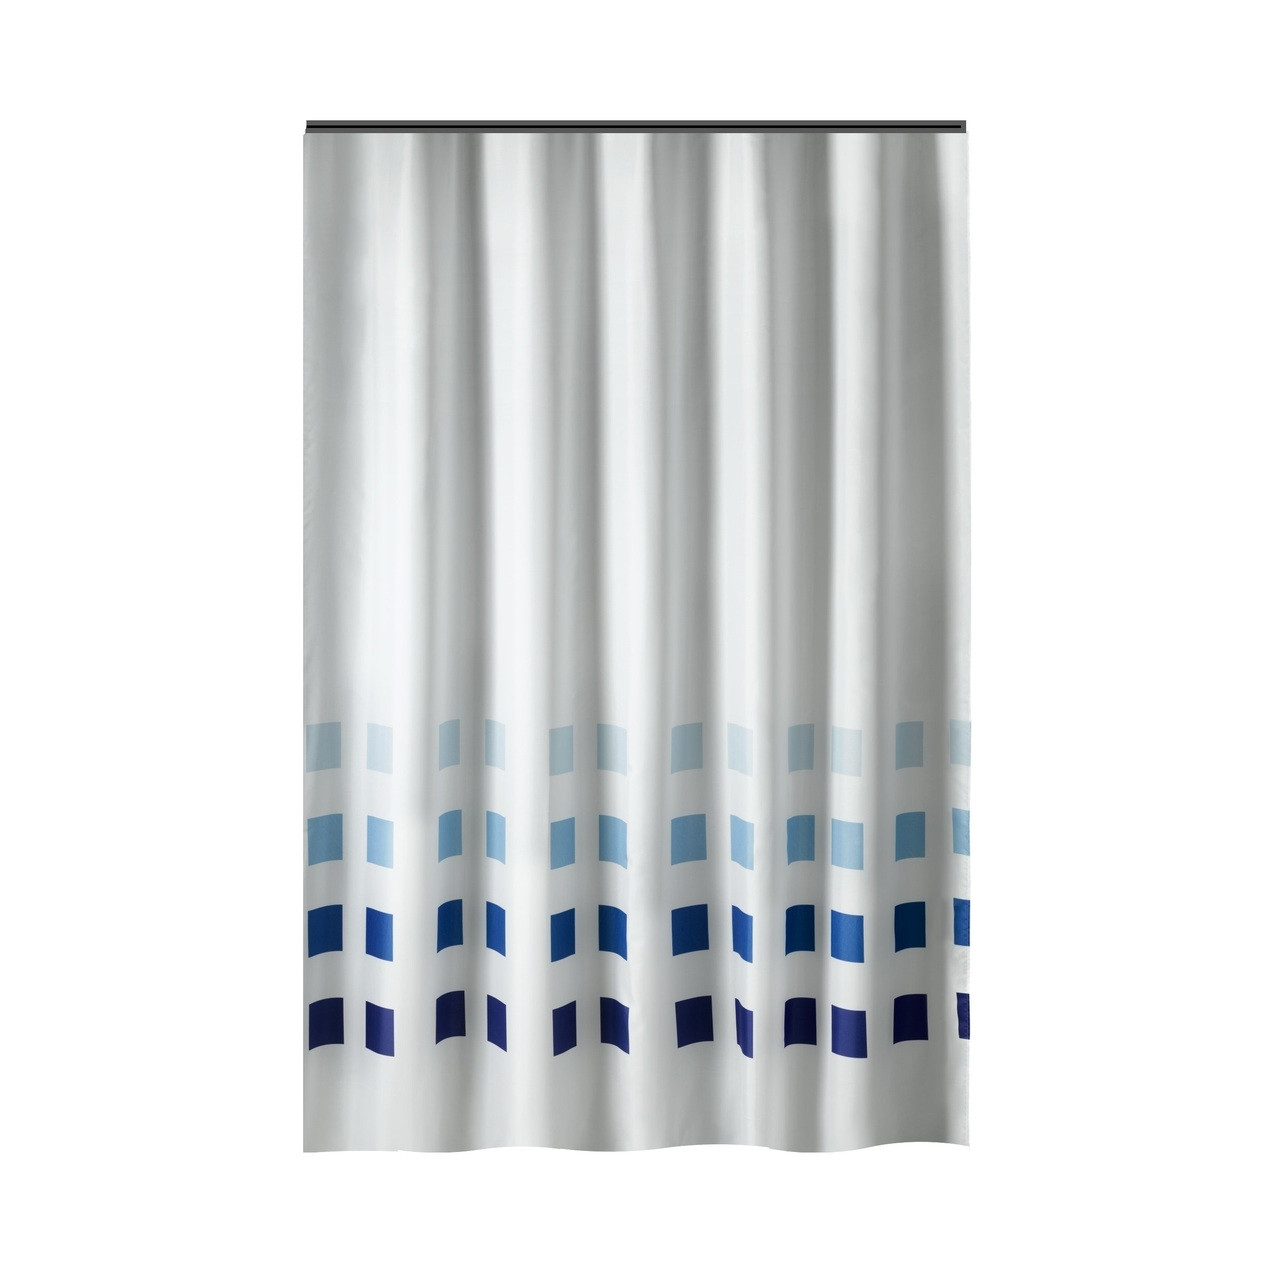 78 inch shower curtain rod